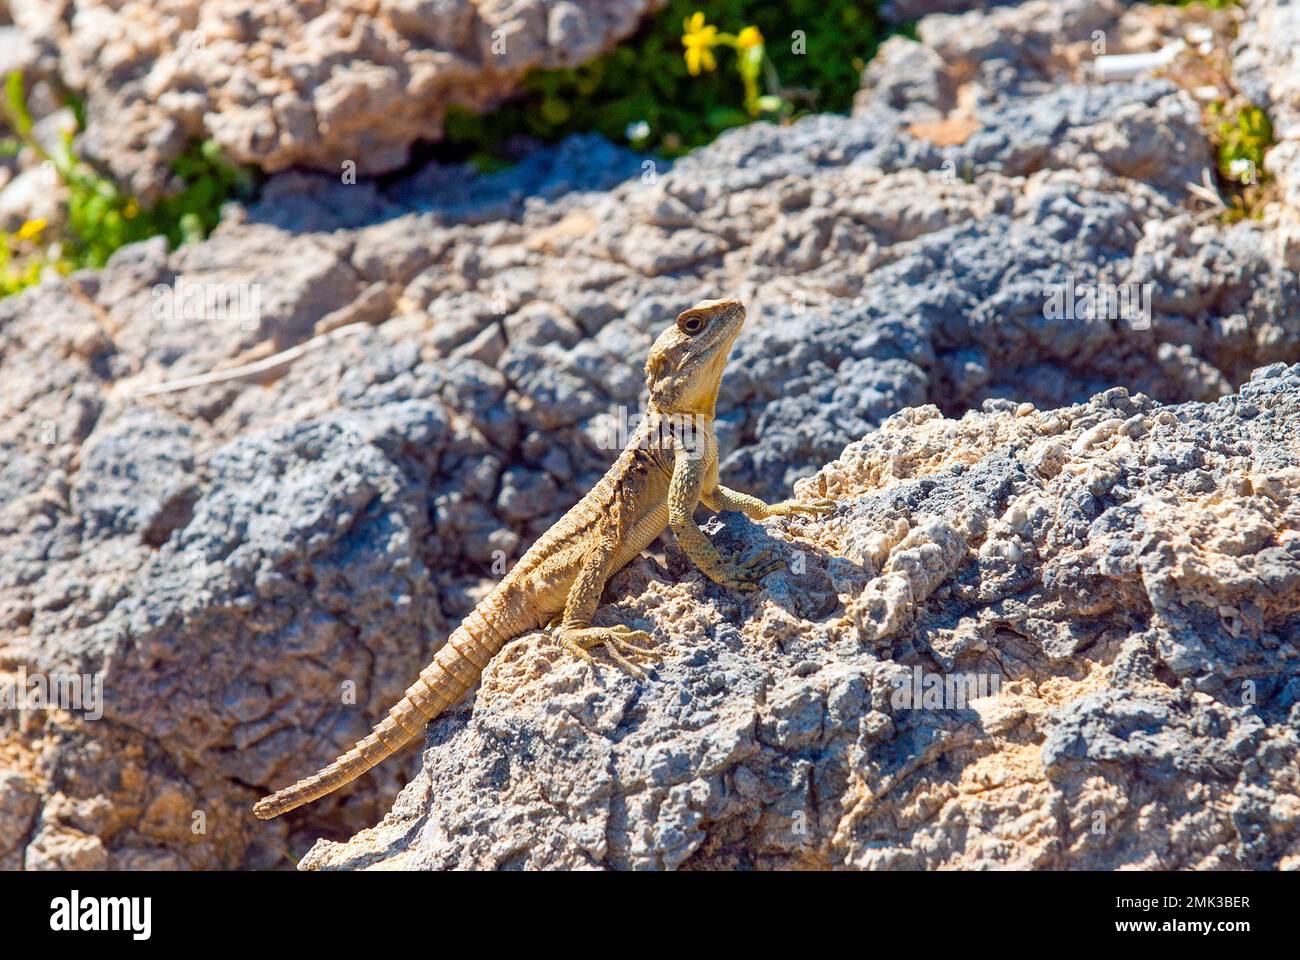 A lizard sitting on a stone. Stock Photo